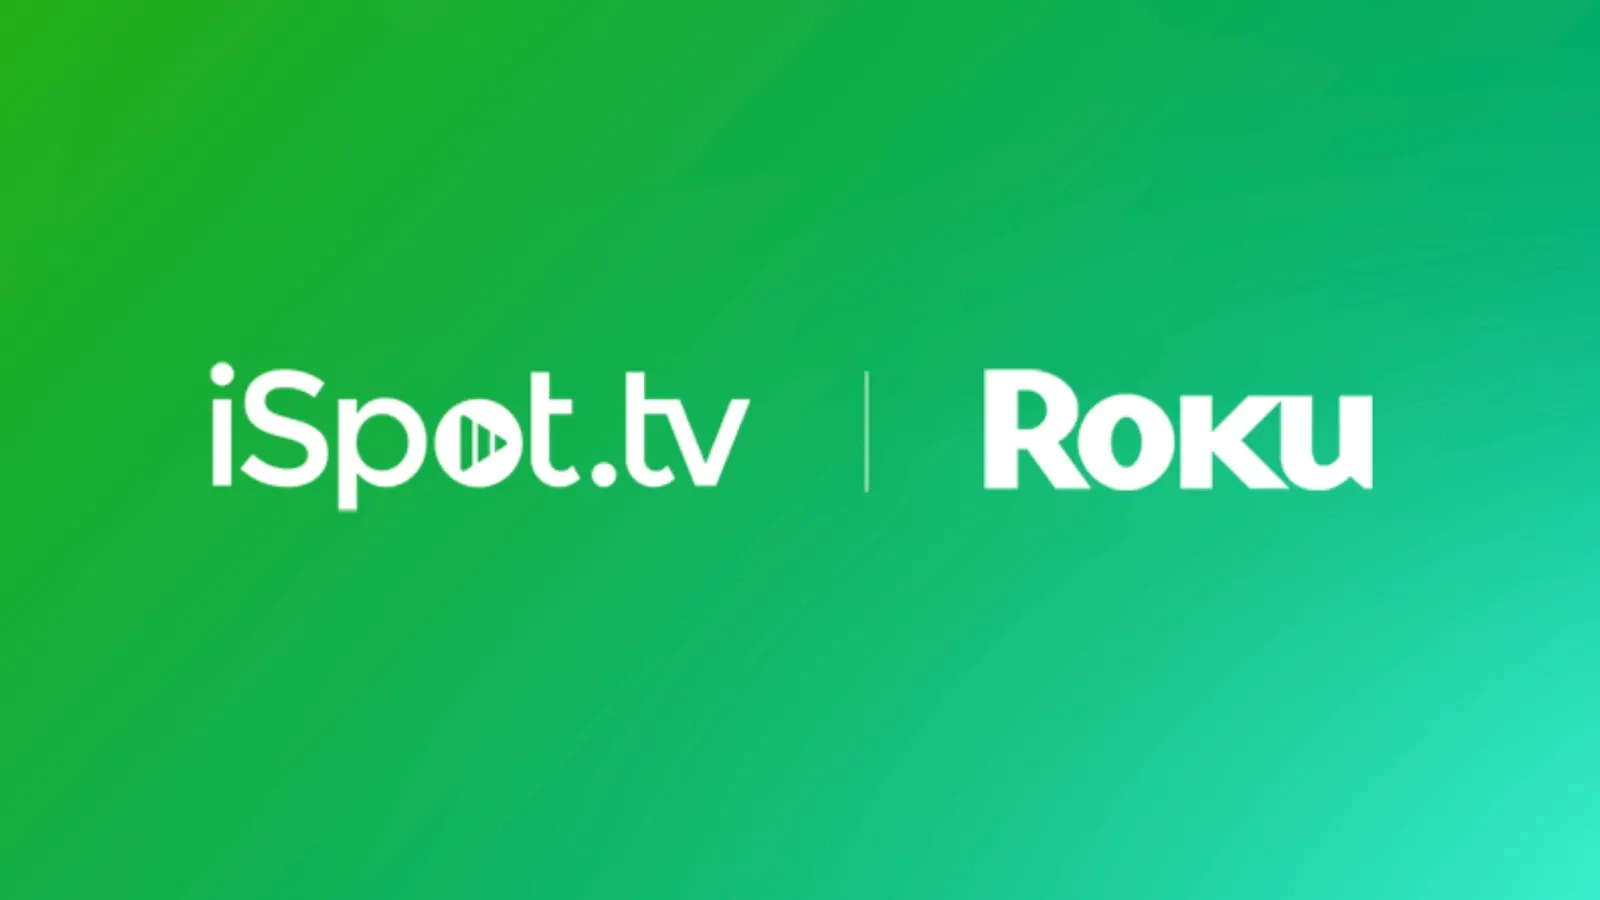 Roku and iSpot partnership